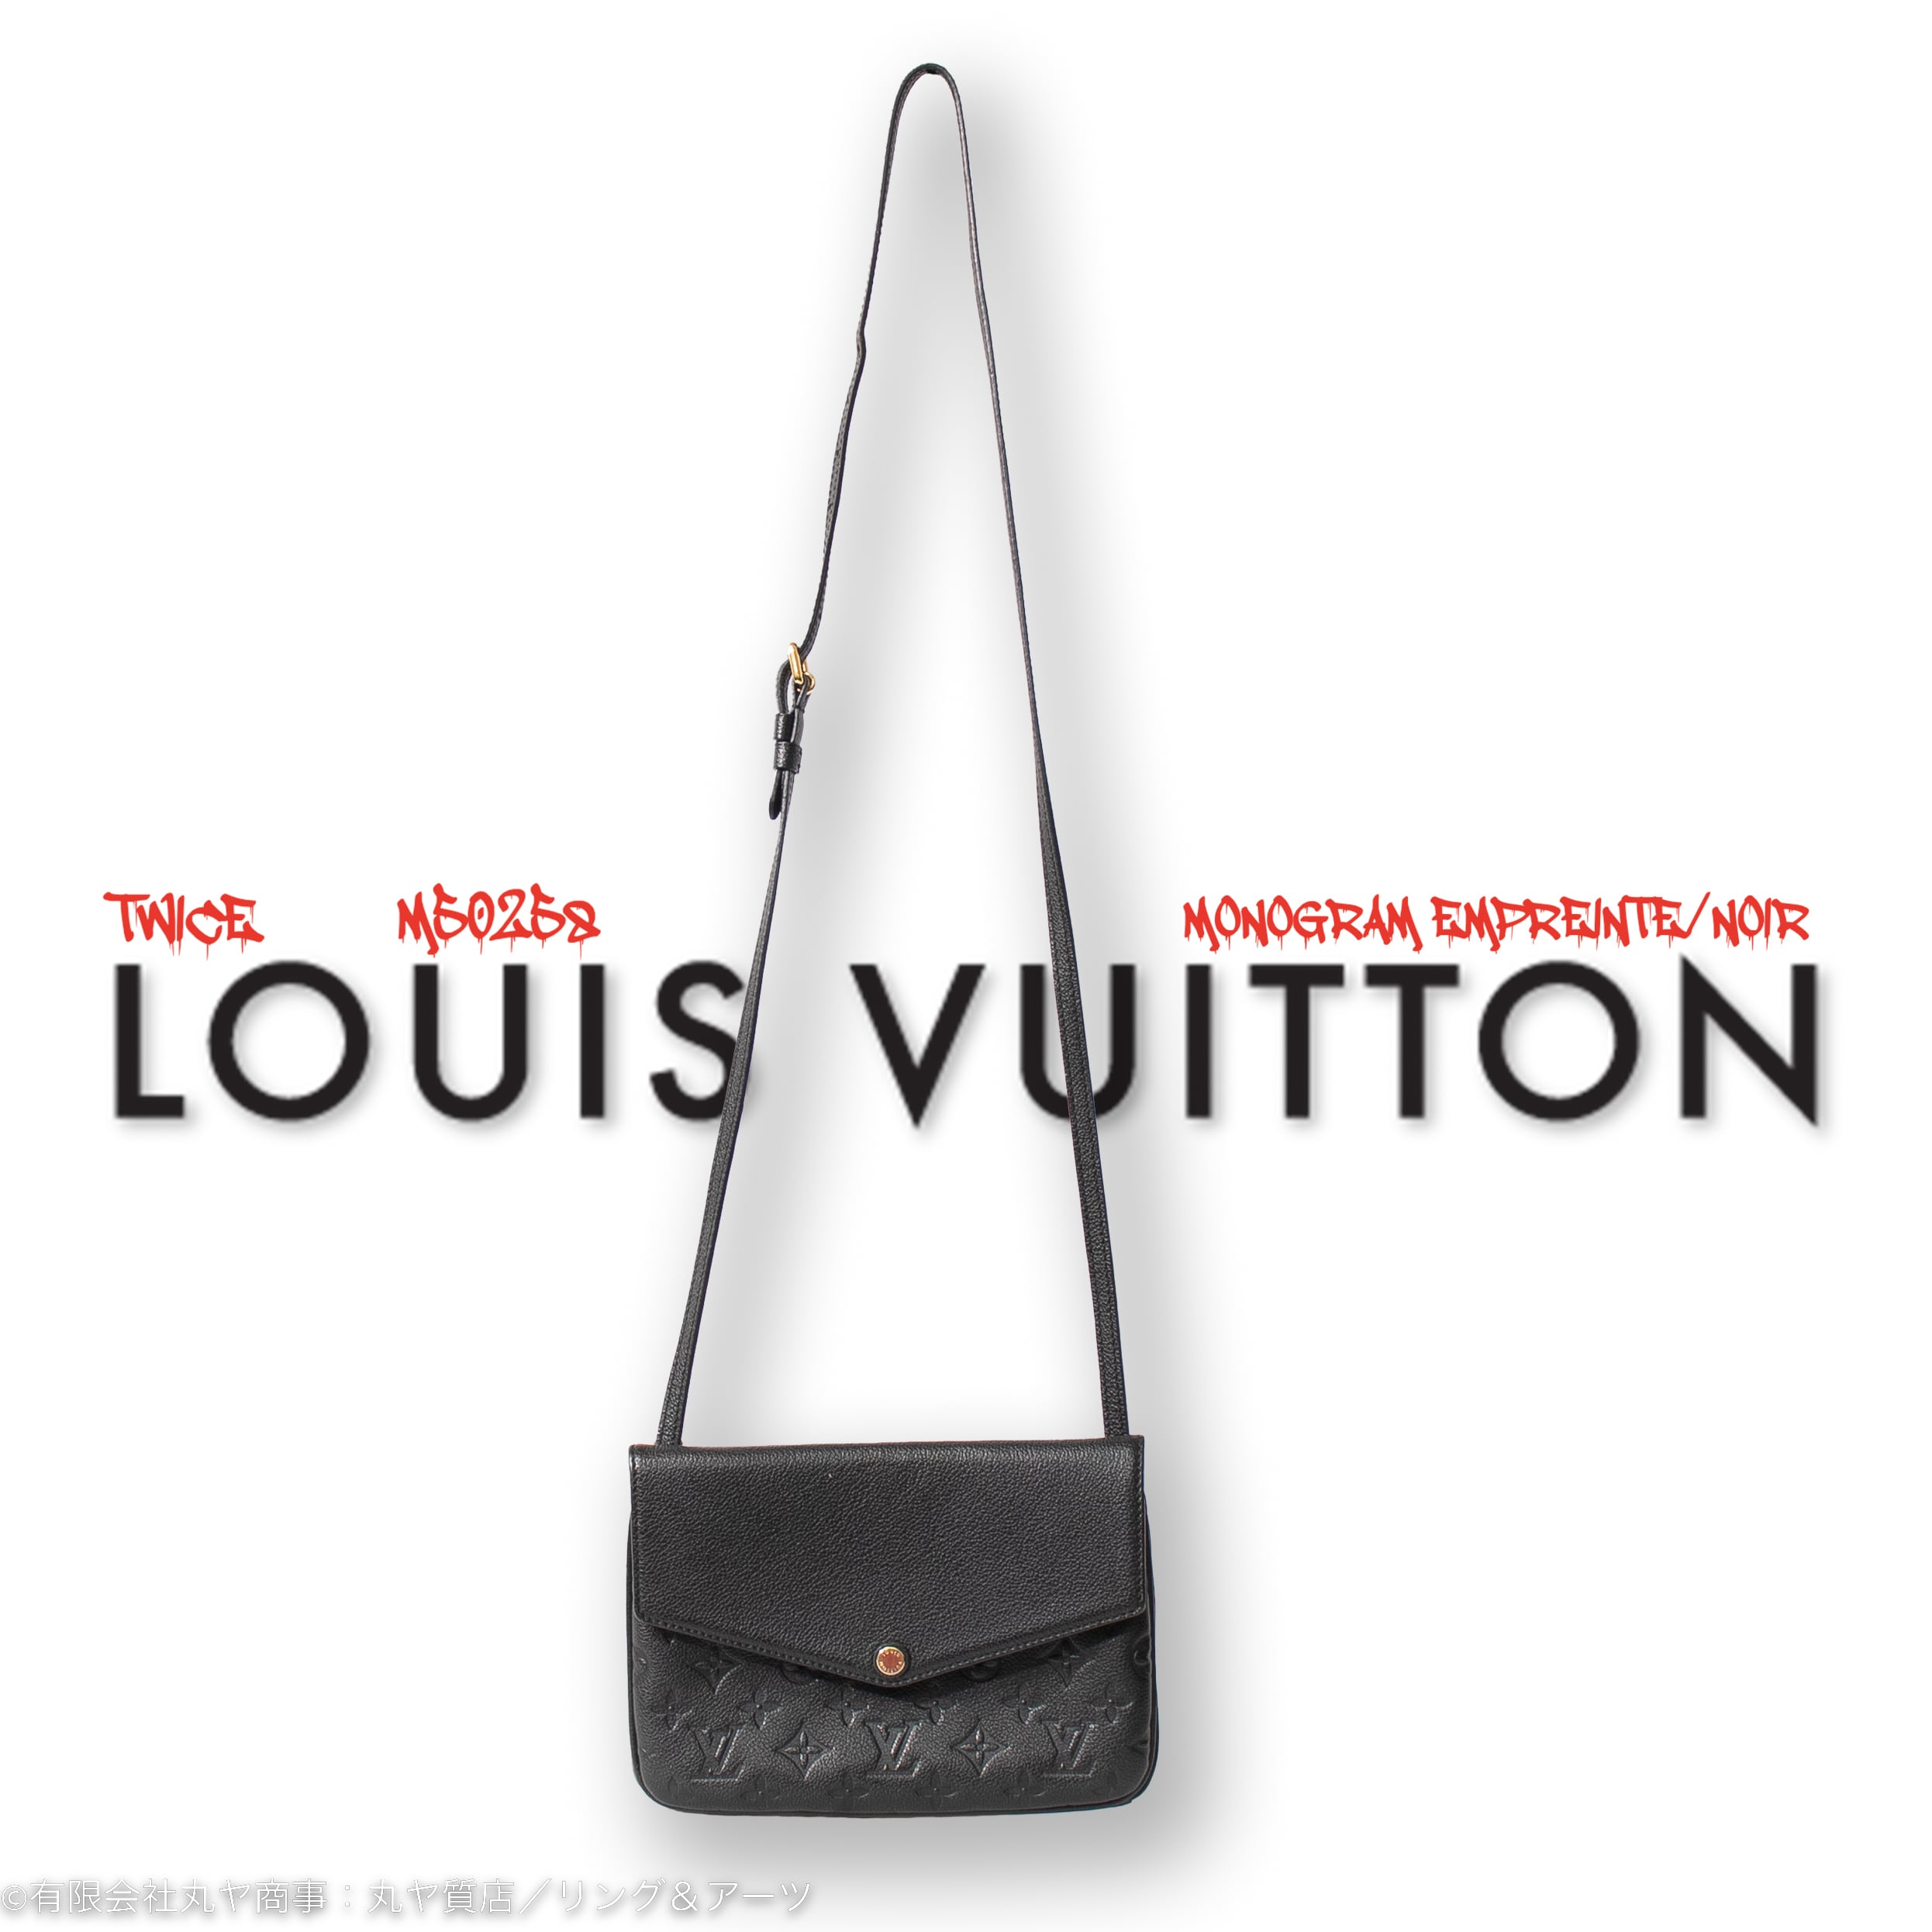 LOUIS VUITTON Twice Noir M50258 Monogram Empreinte Leather